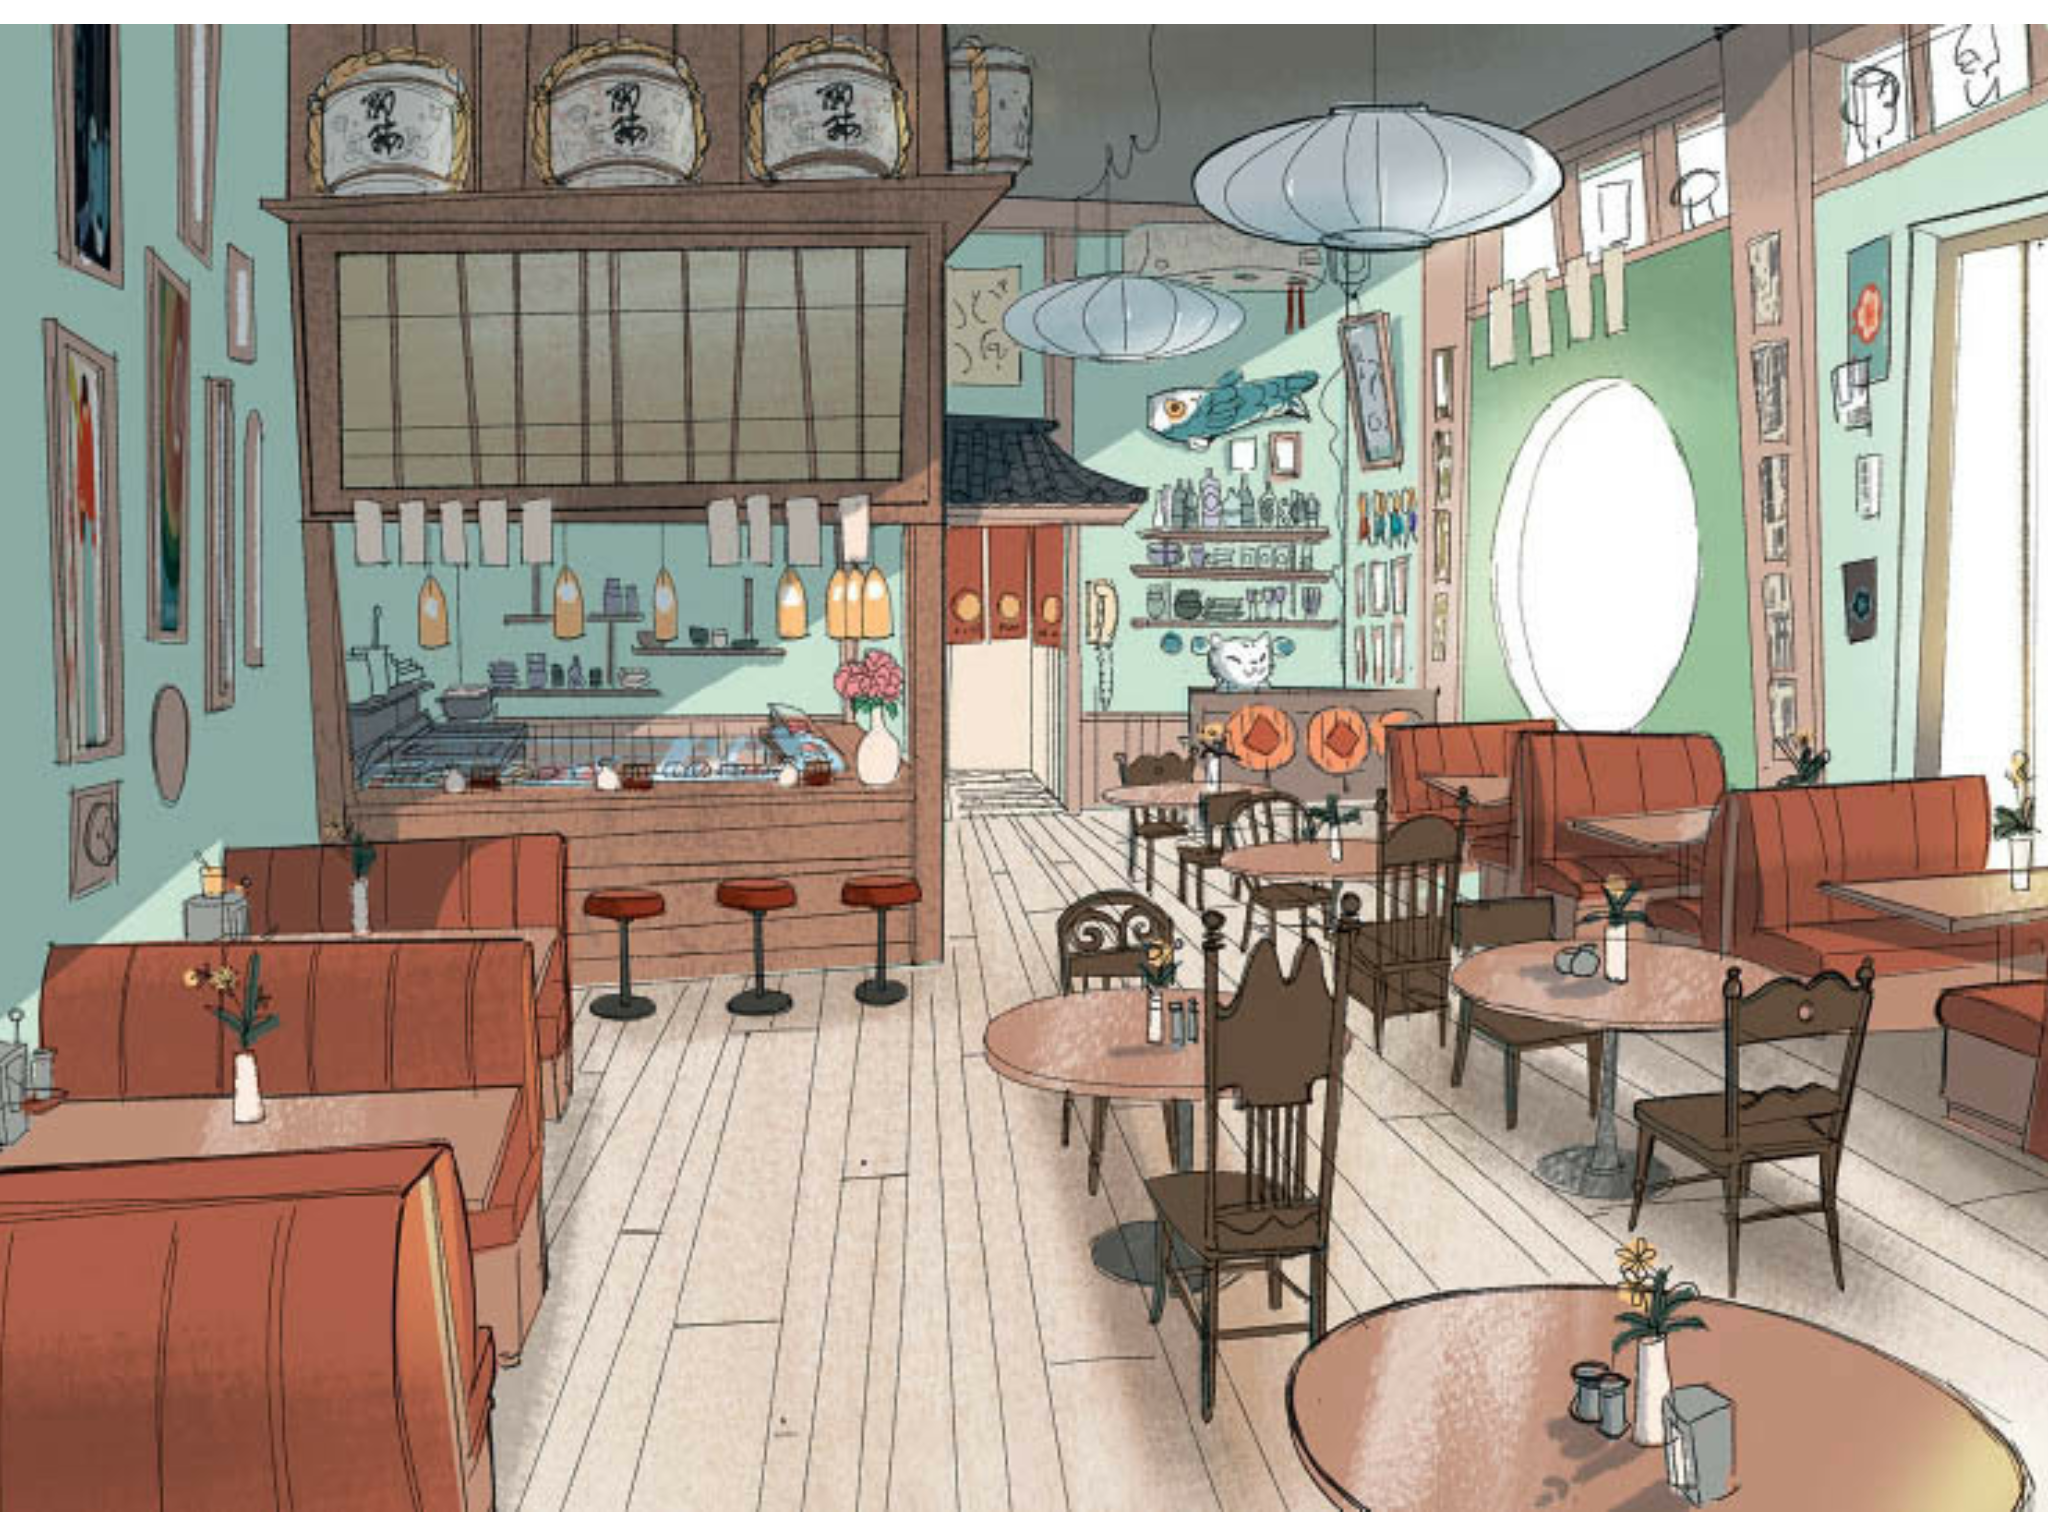 Кафе референс. Аниме кафе. Кафе в стиле аниме. Кафе в мультяшном стиле. Ресторан в стиле аниме.